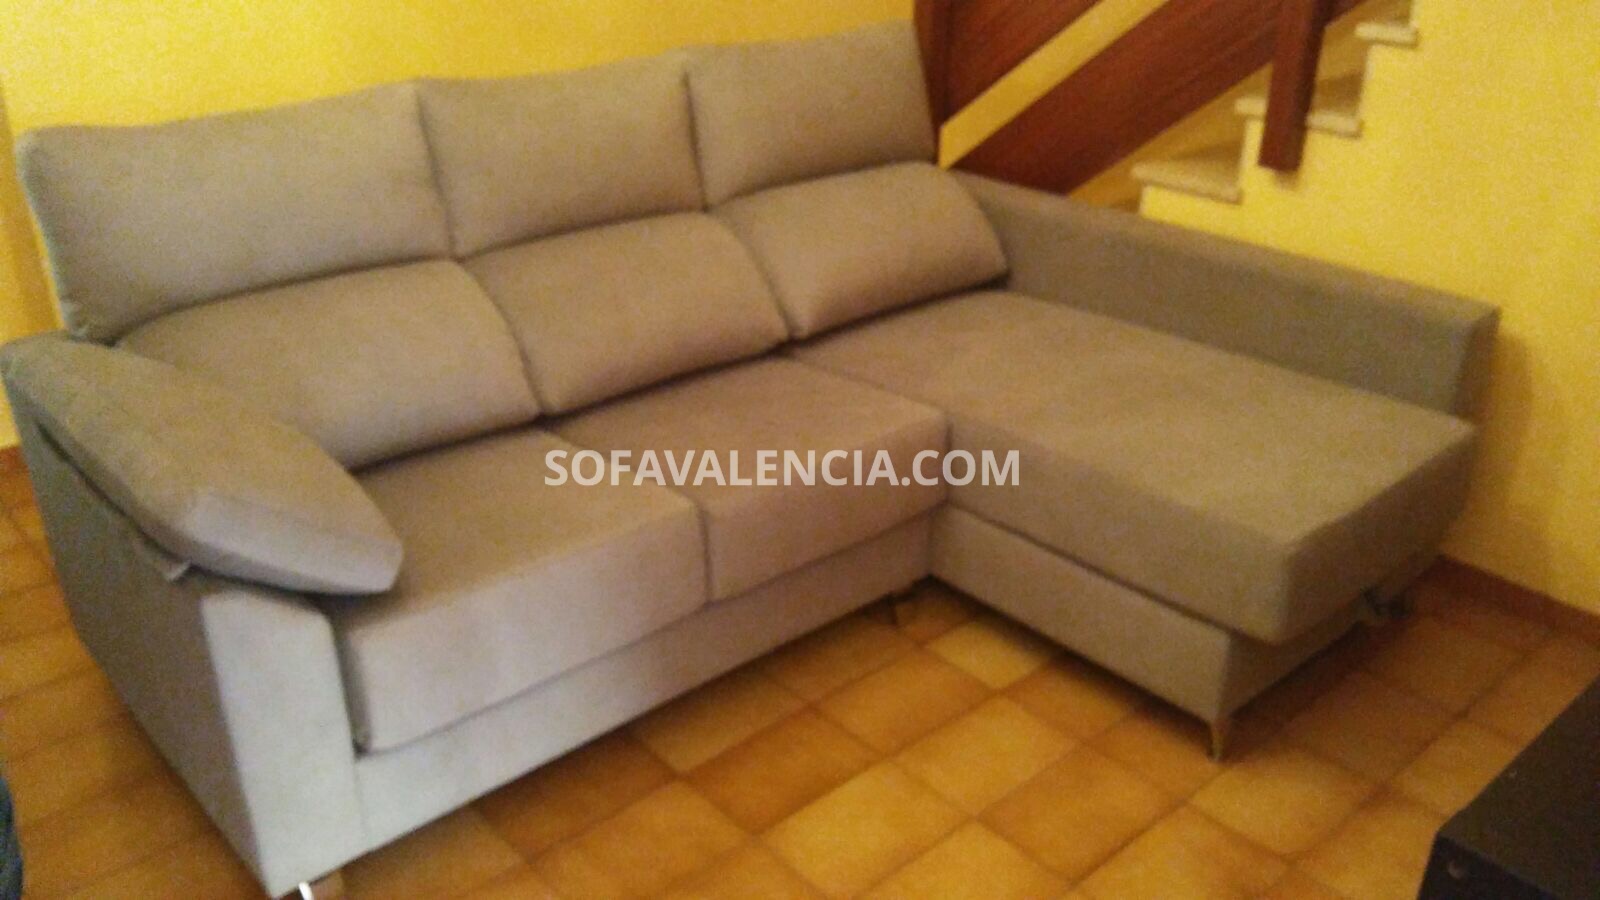 sofa-valencia-fotos-clientes-55